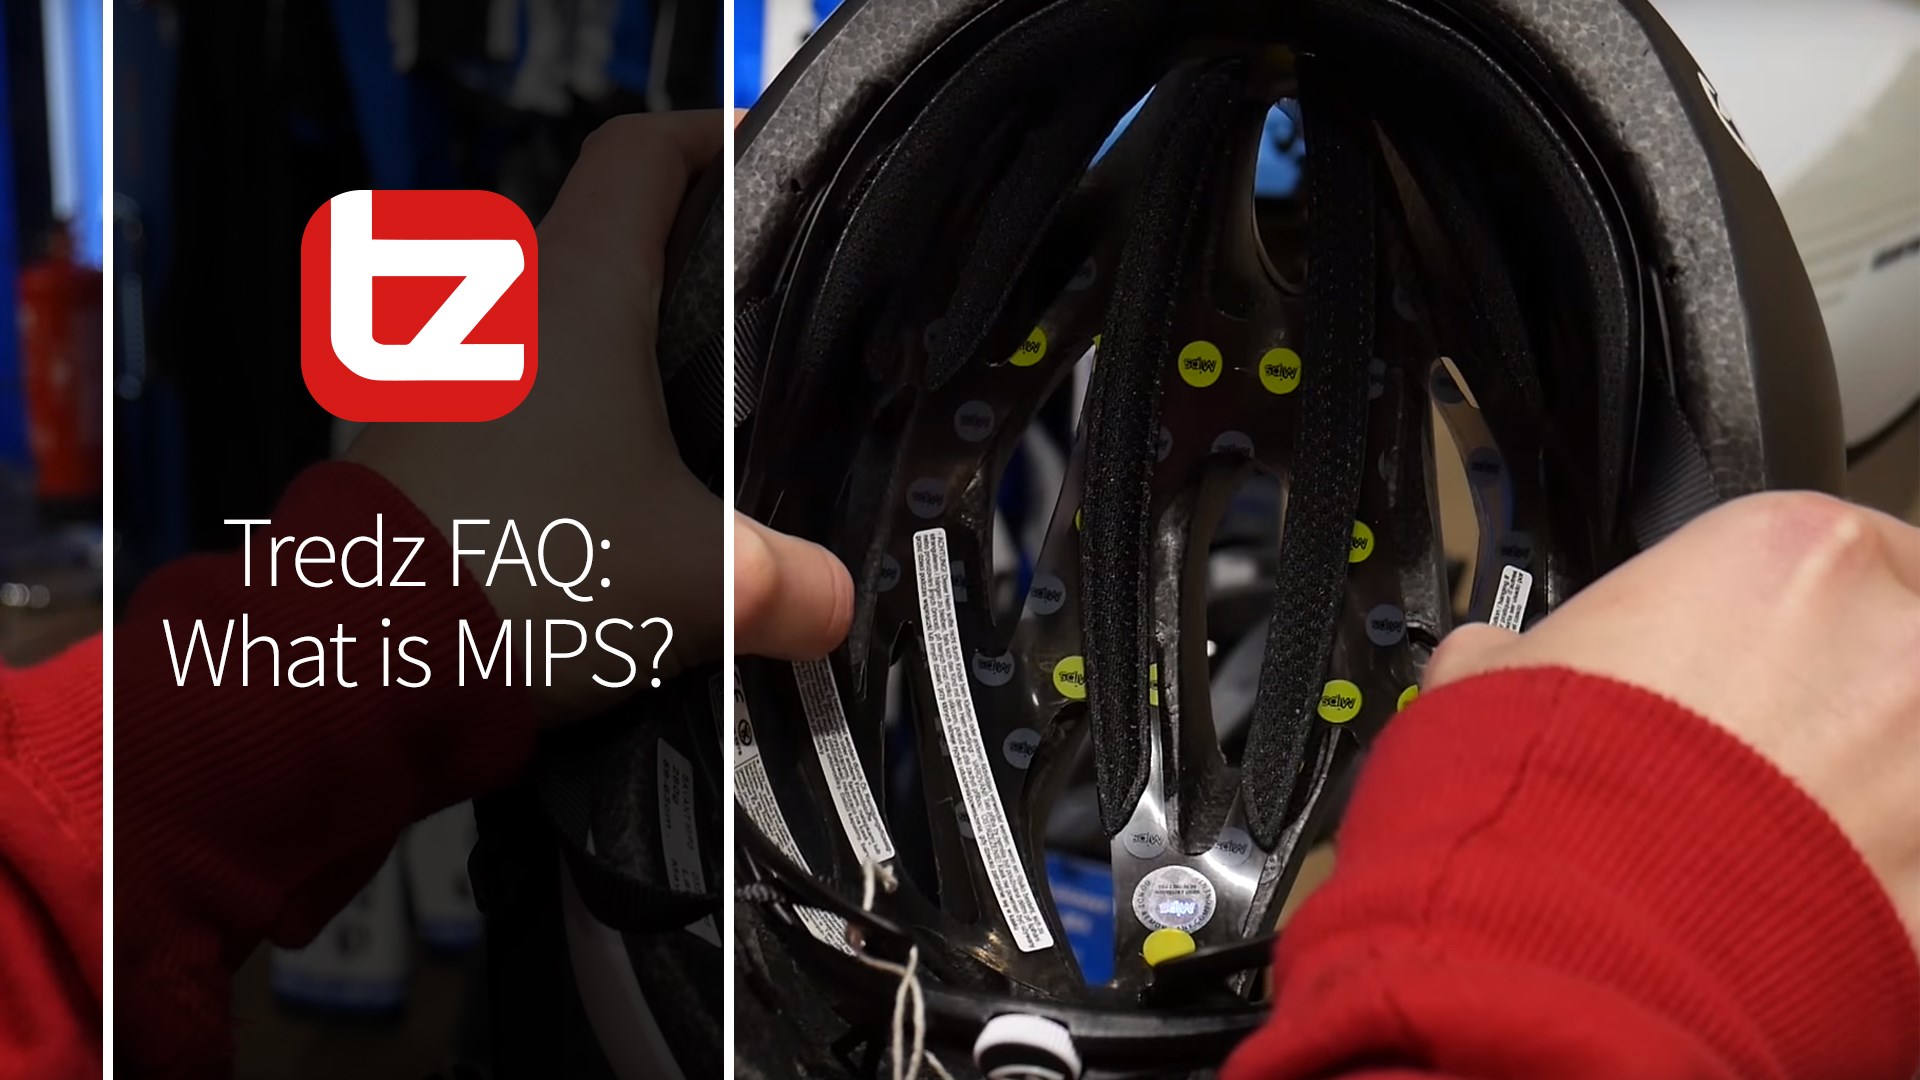 Tredz FAQ: What is MIPS?